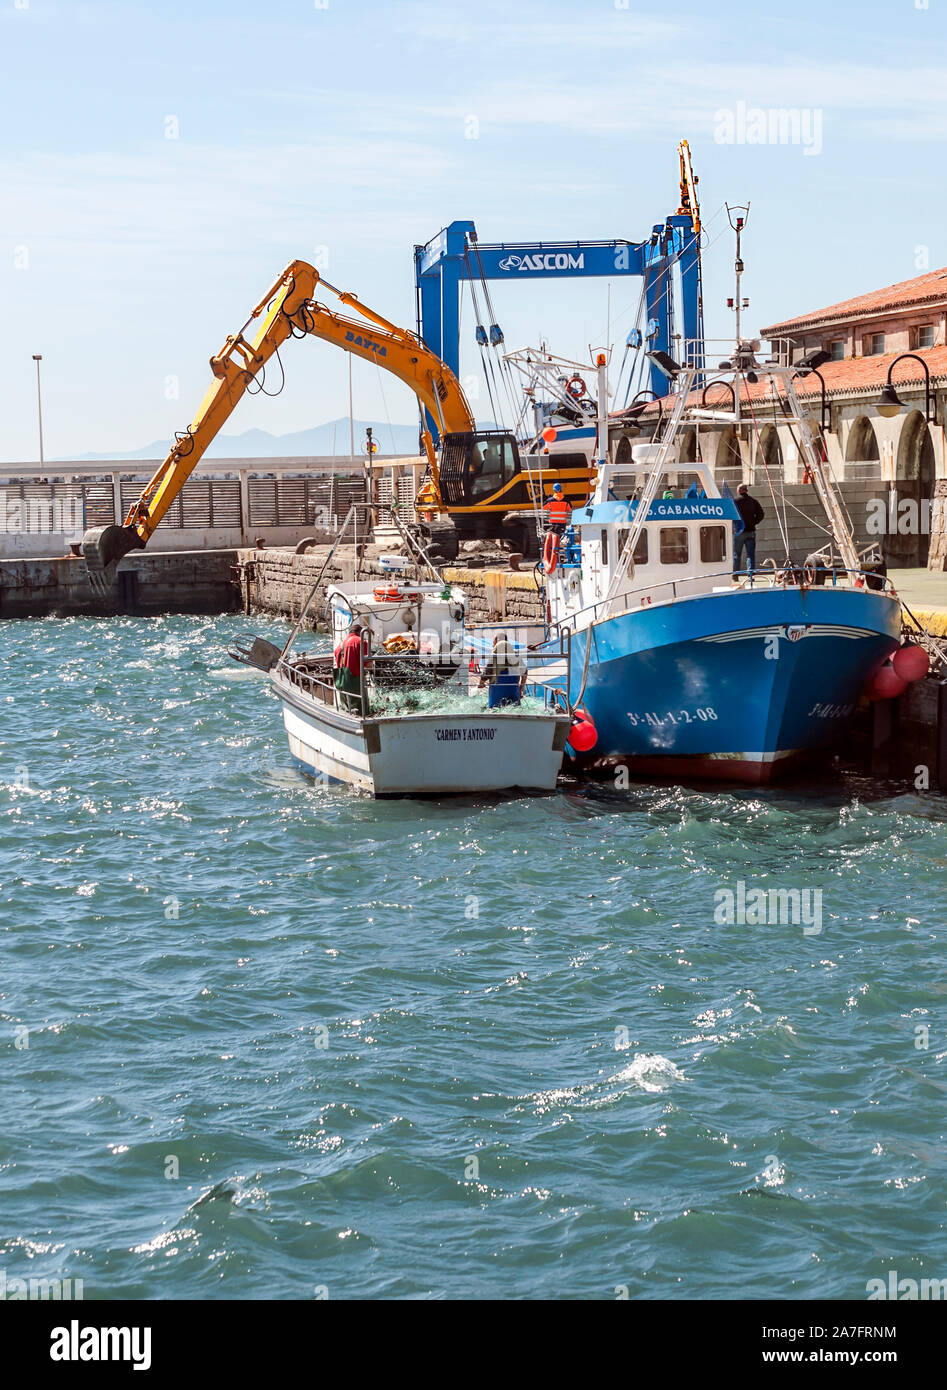 Harbor of Tarifa with boats and cranes Stock Photo